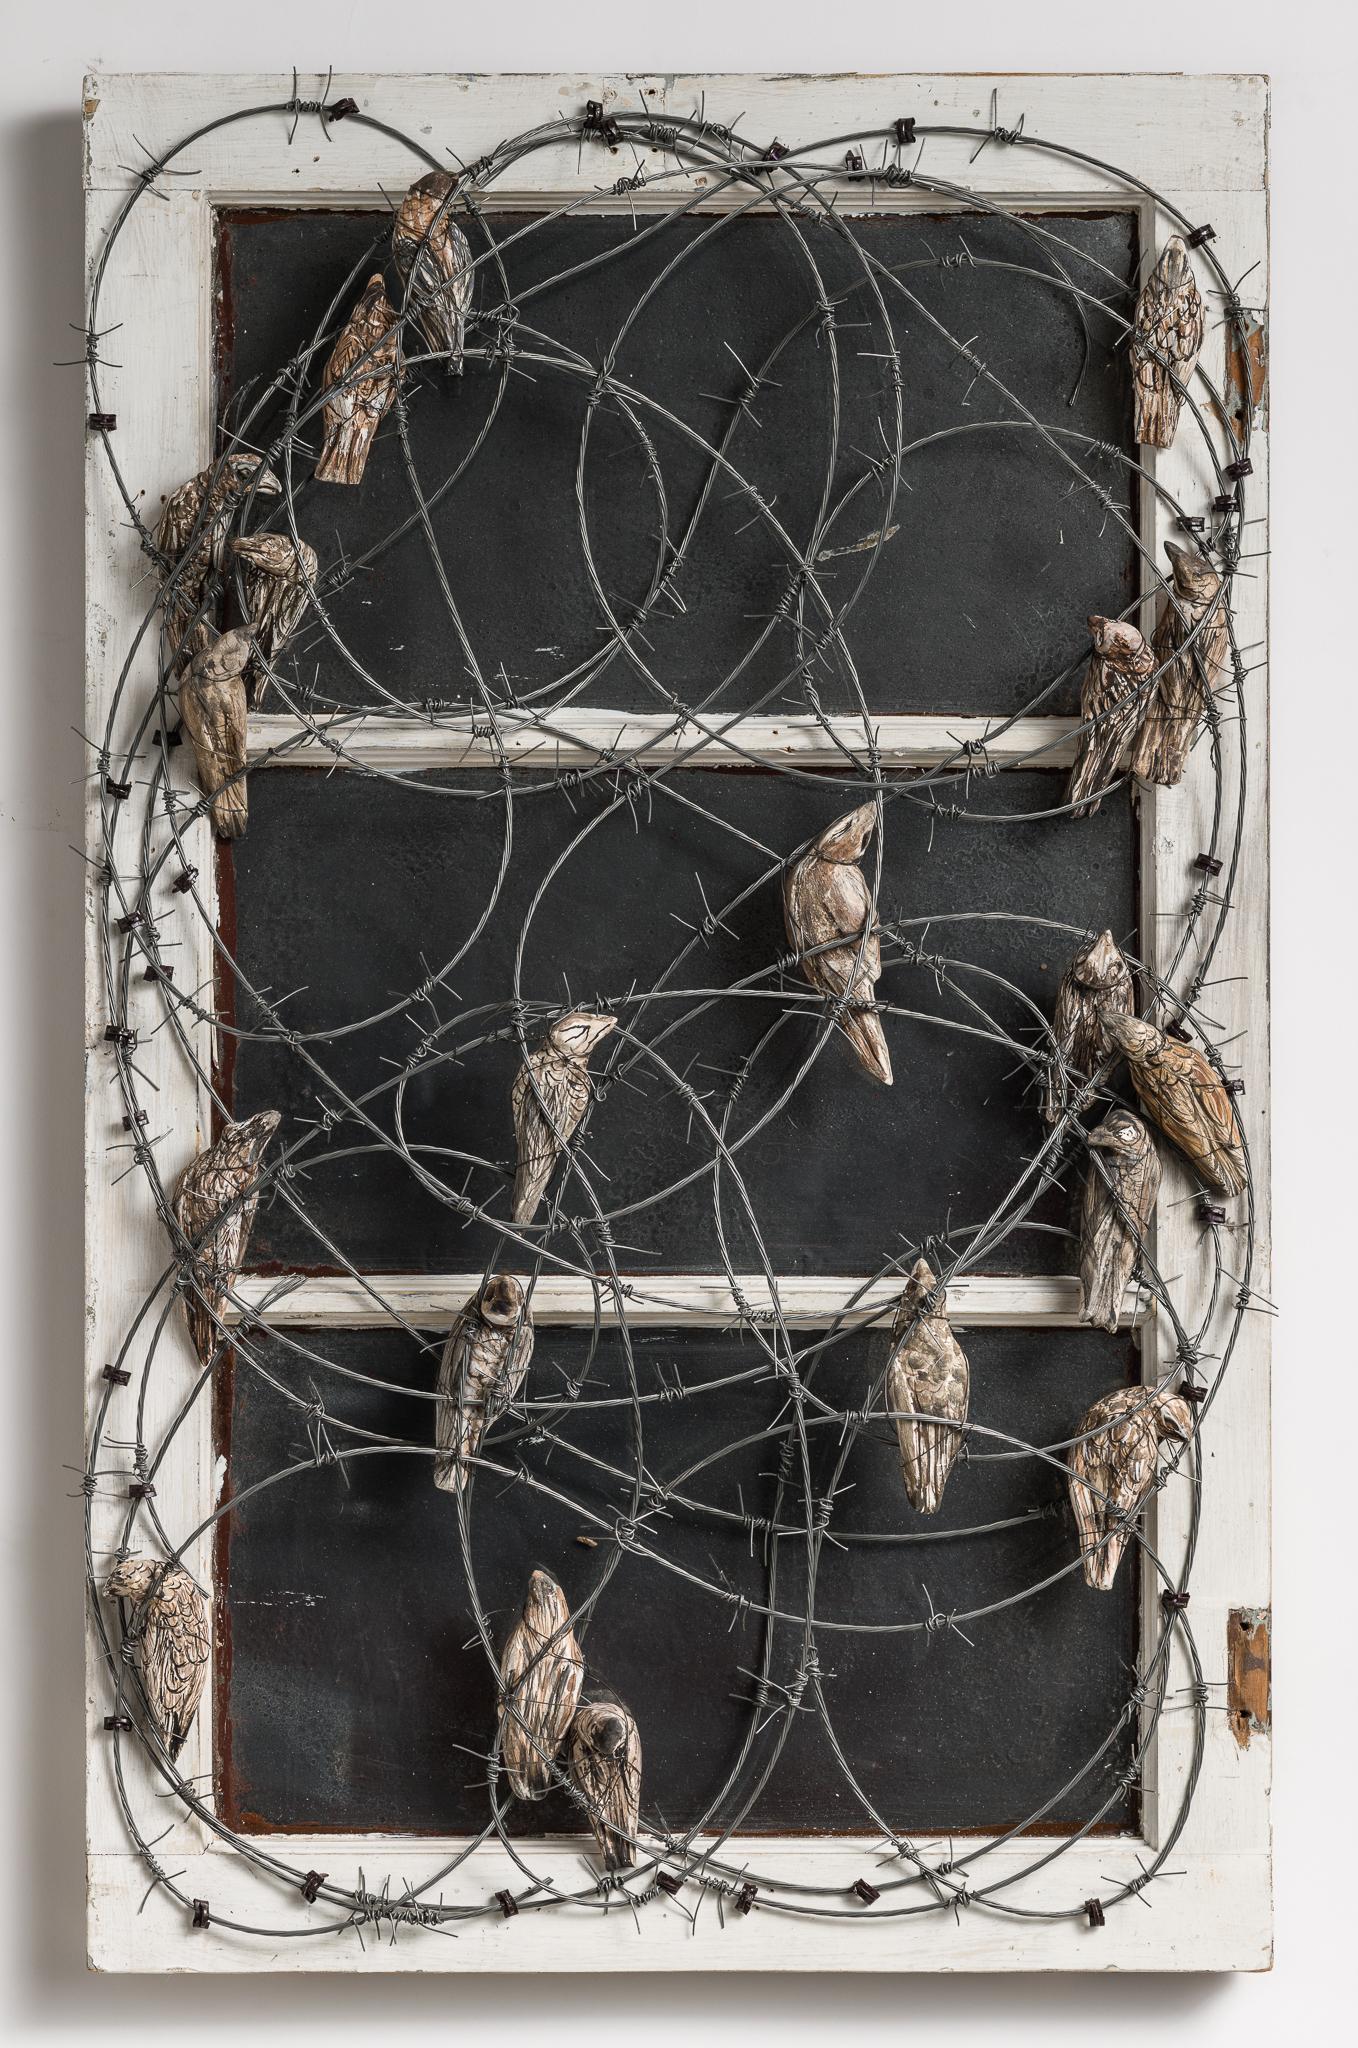 Window Frame with Birds & Barbwire: 'Wren Day'